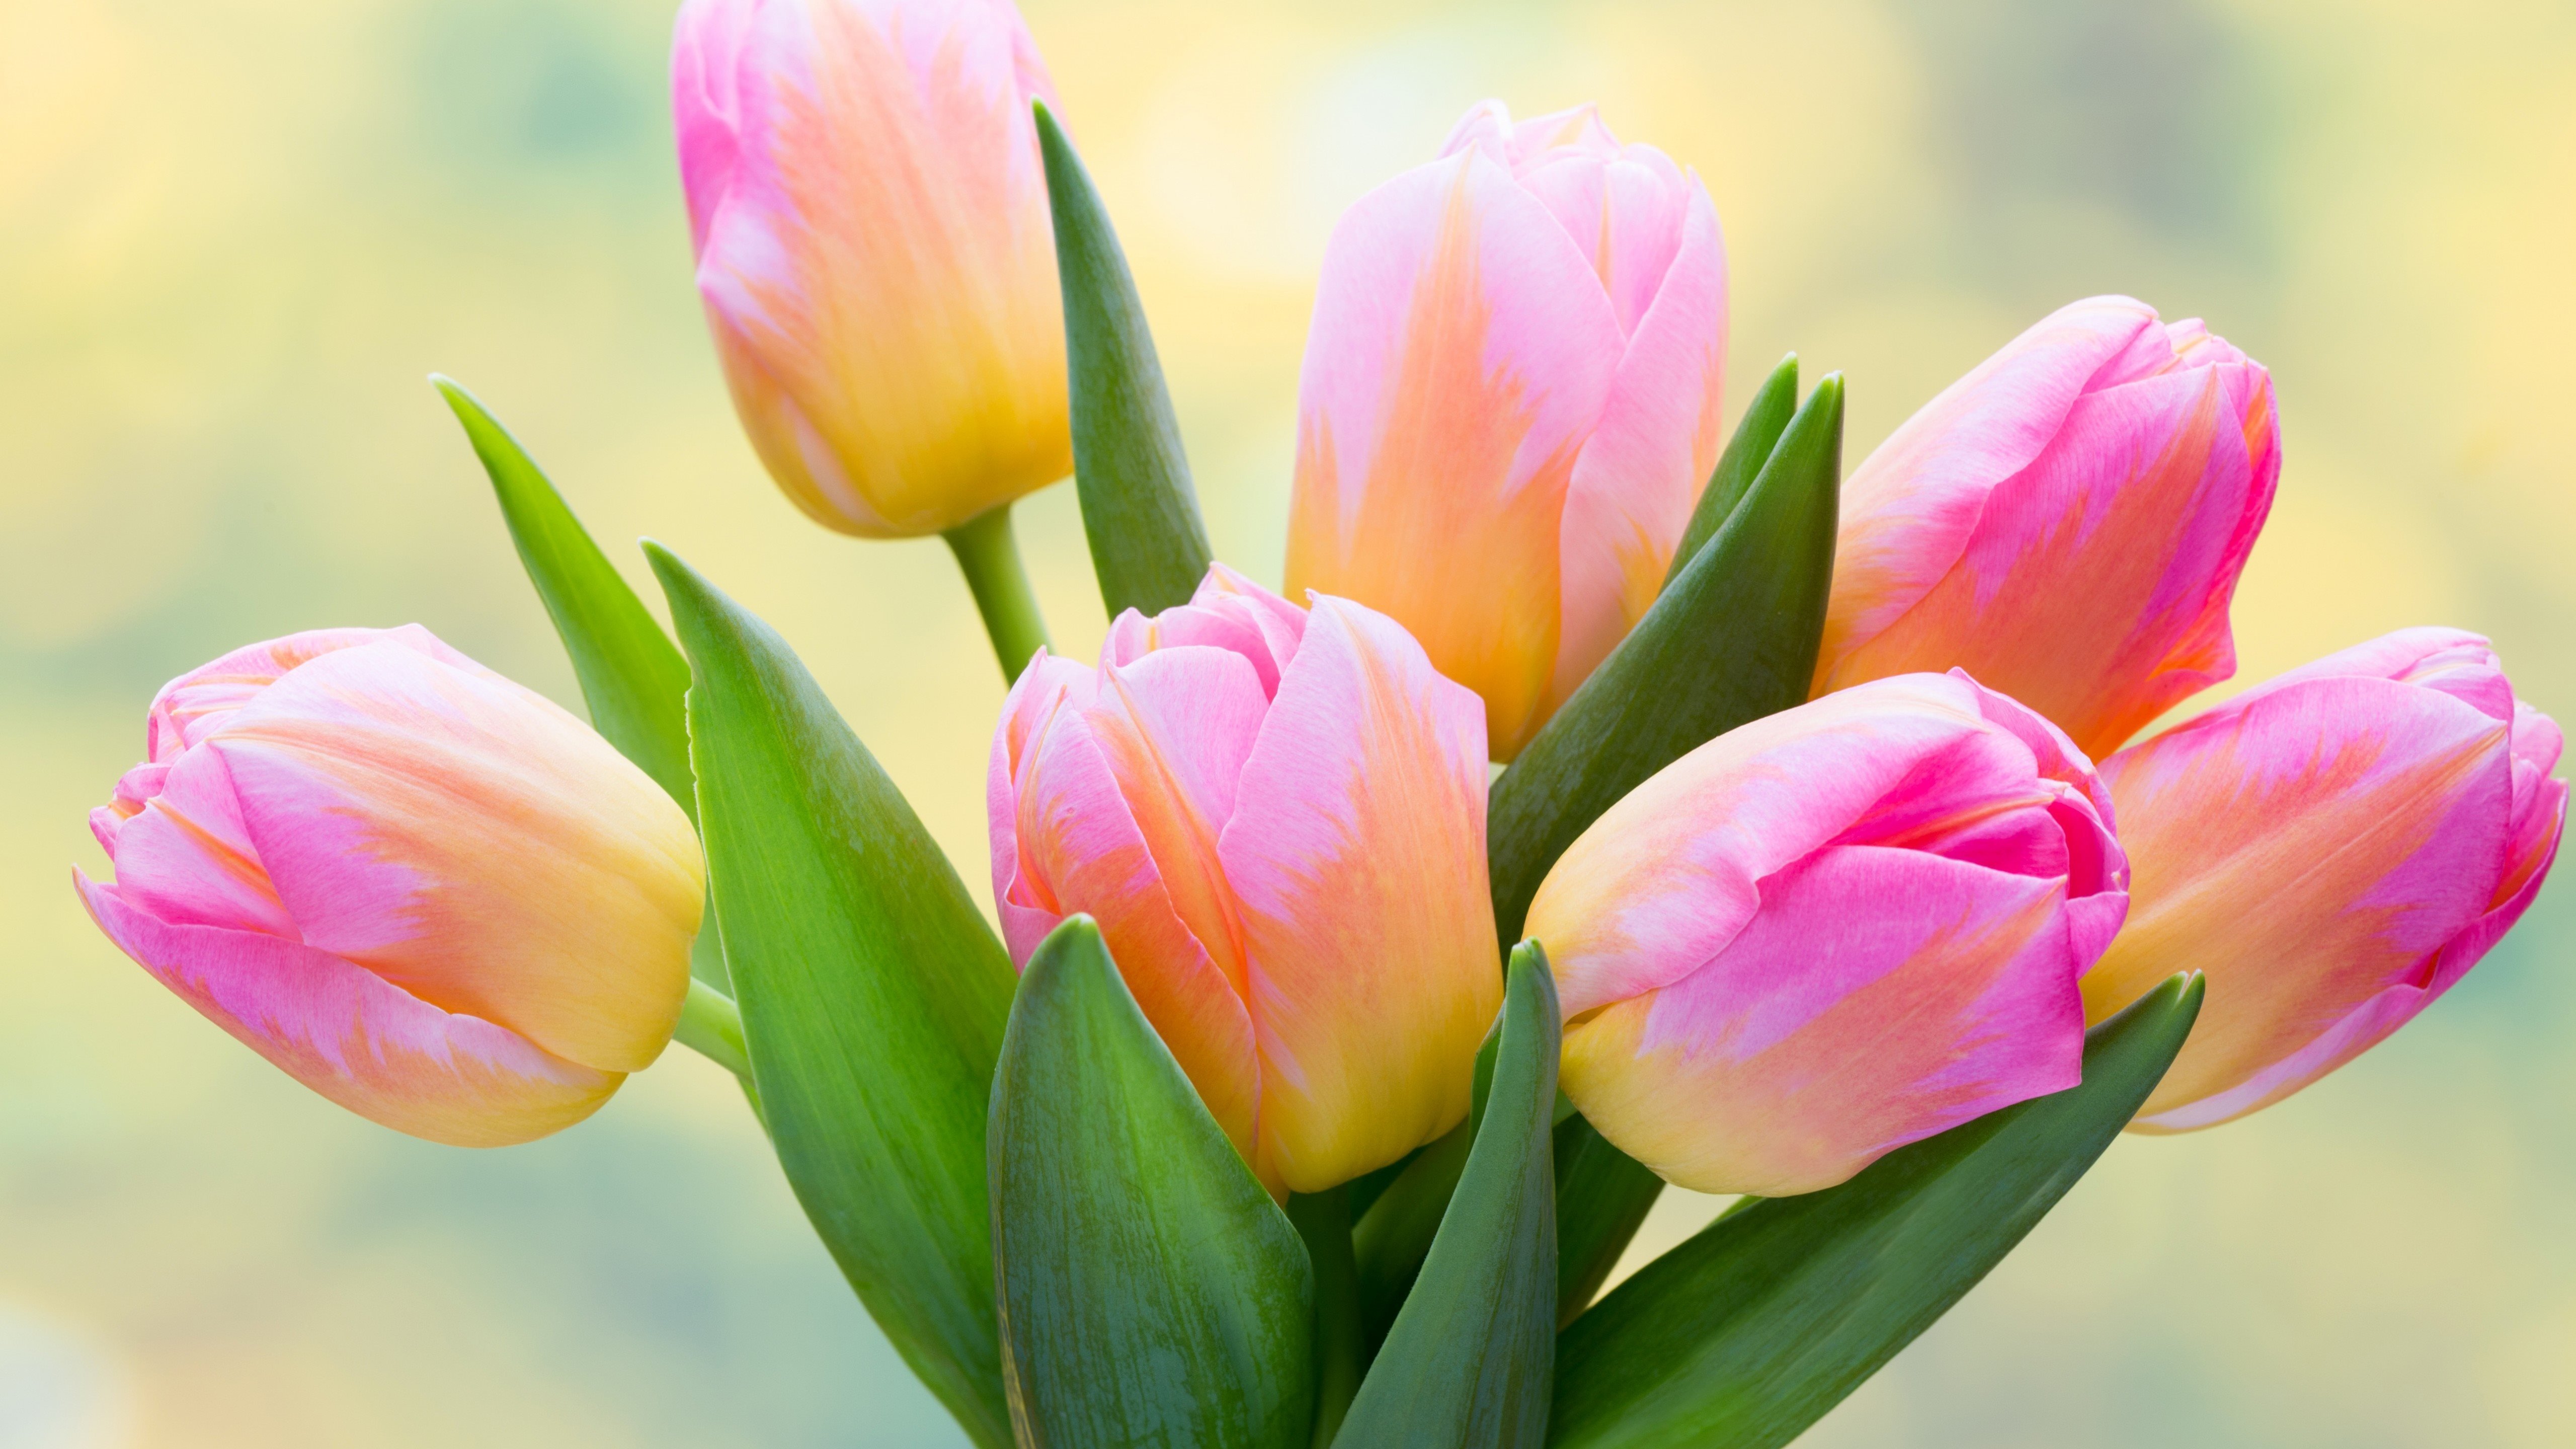 https://besthqwallpapers.com/Uploads/1-12-2016/10095/pink-tulips-5k-bouquet-blur.jpg